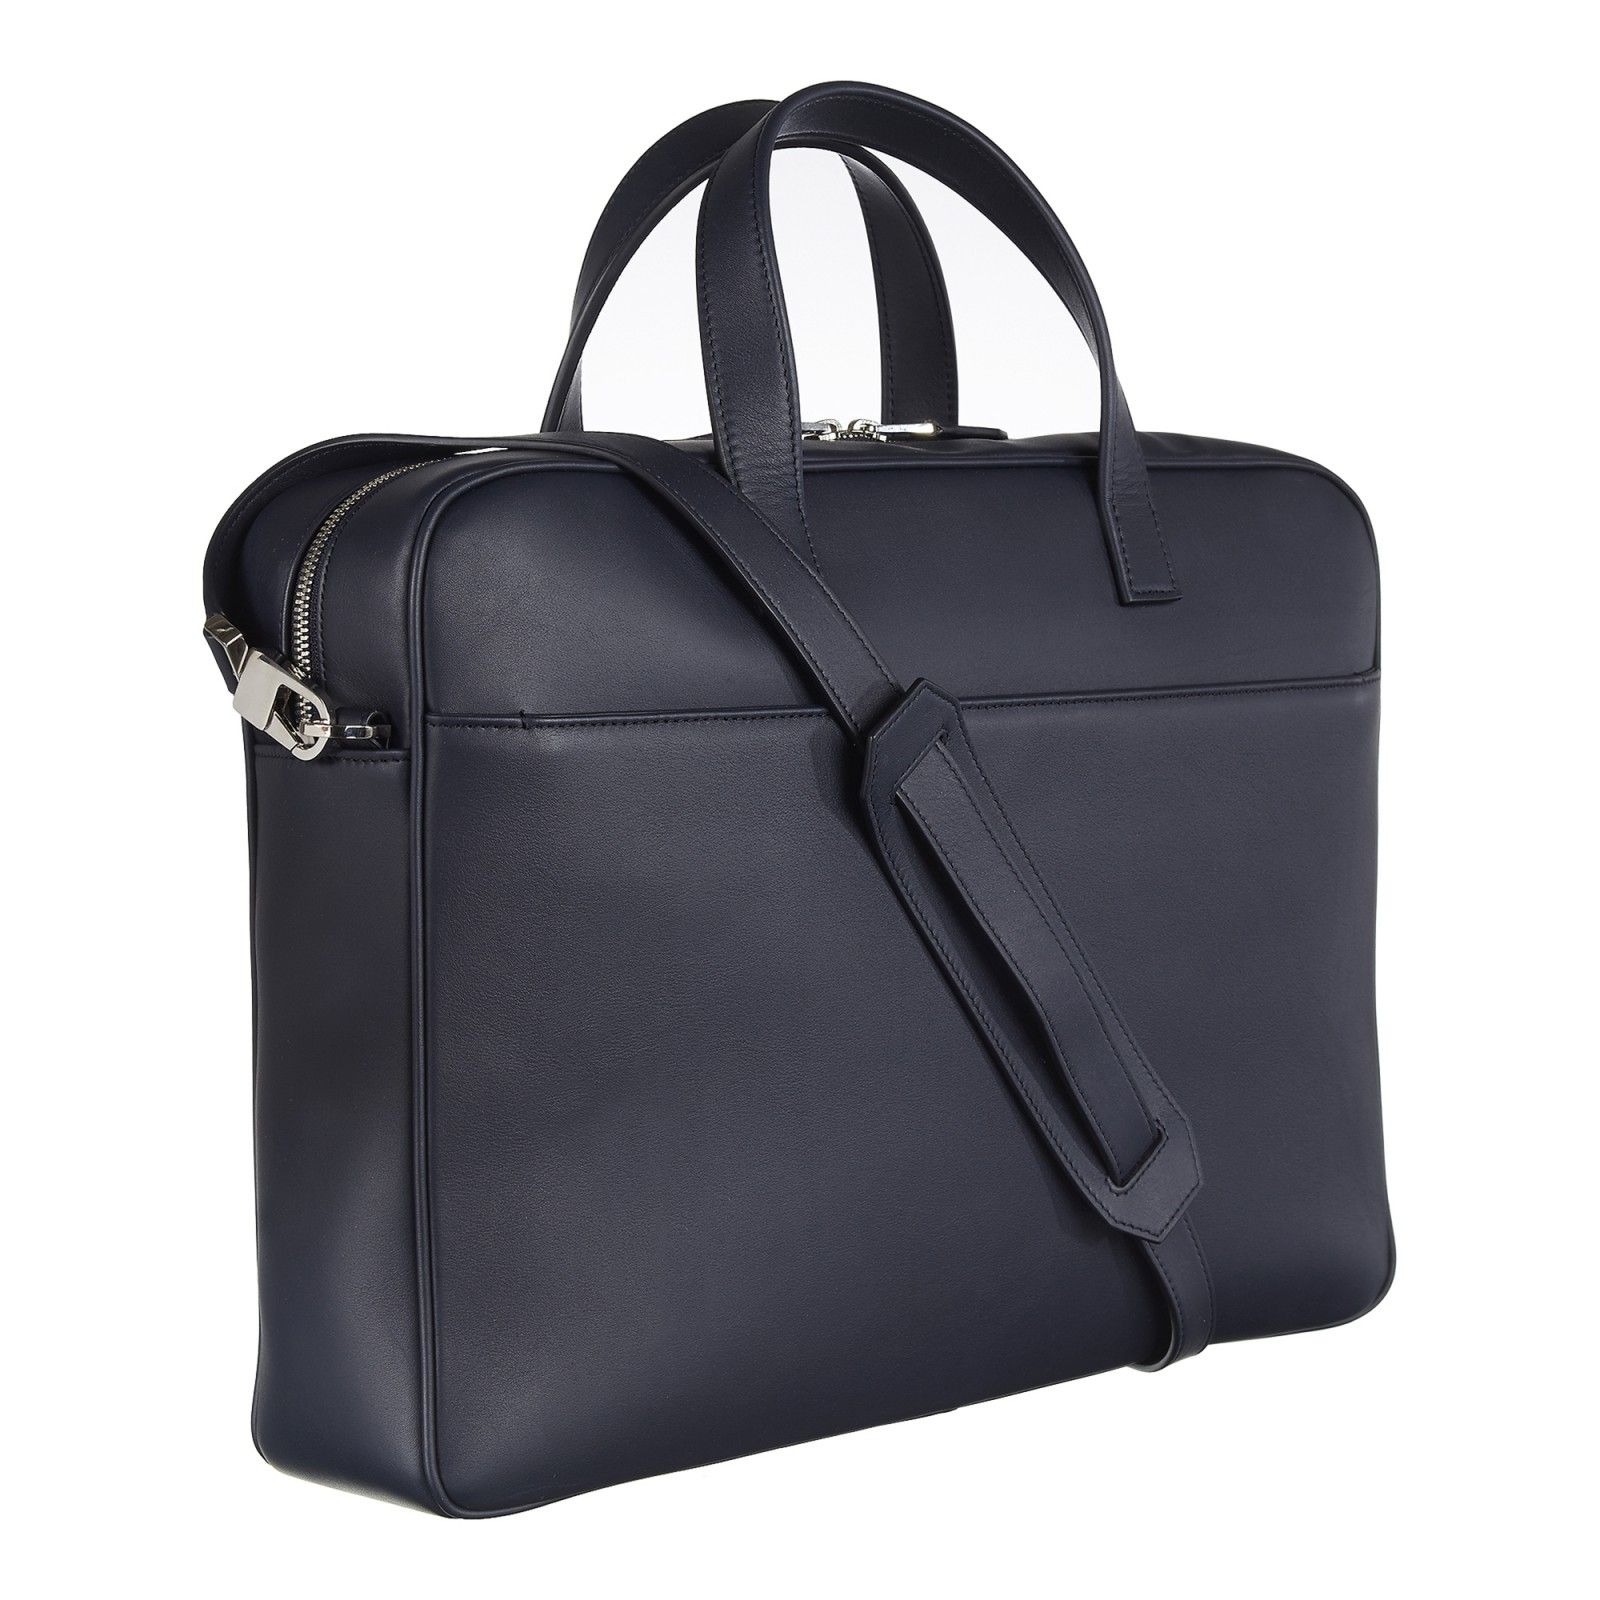 bruton-briefcase-in-navy-textured-calfskin-leather_side-view